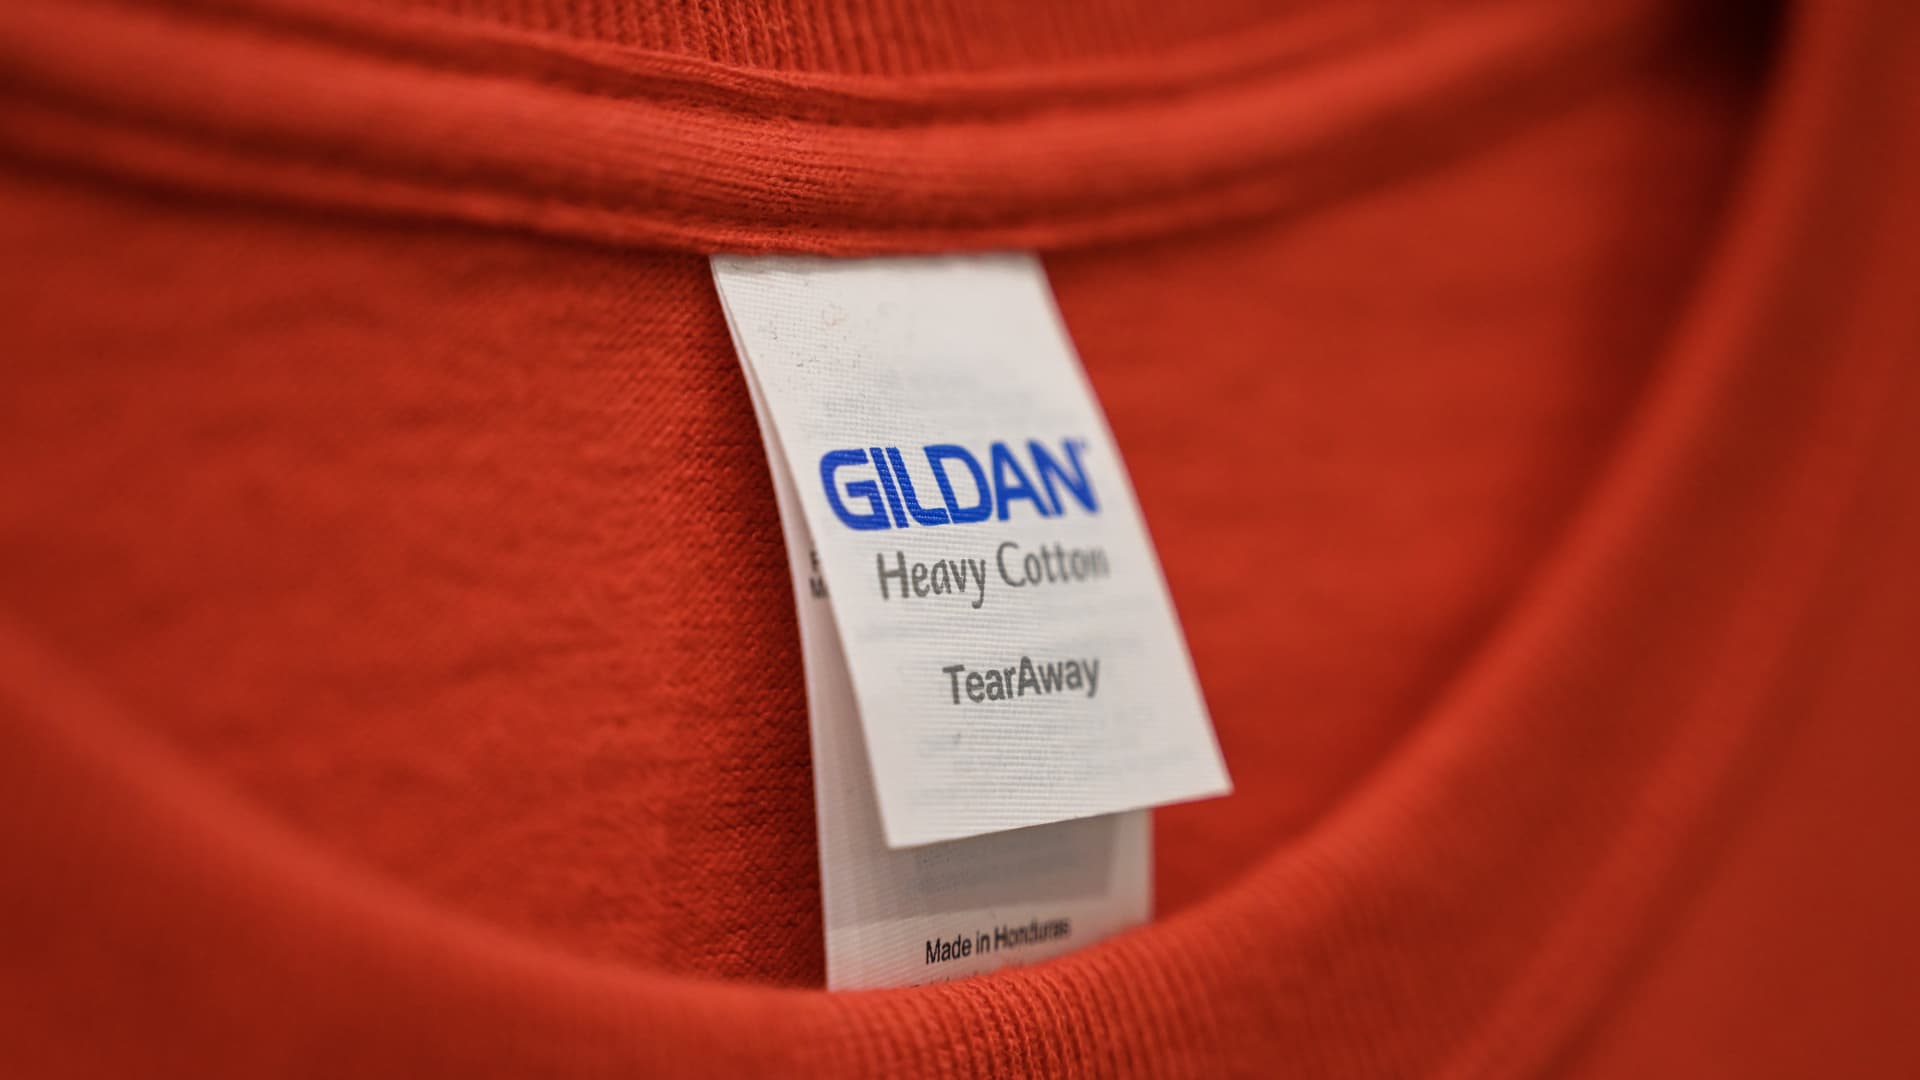 Gildan shareholder meeting called as activists push for CEO return